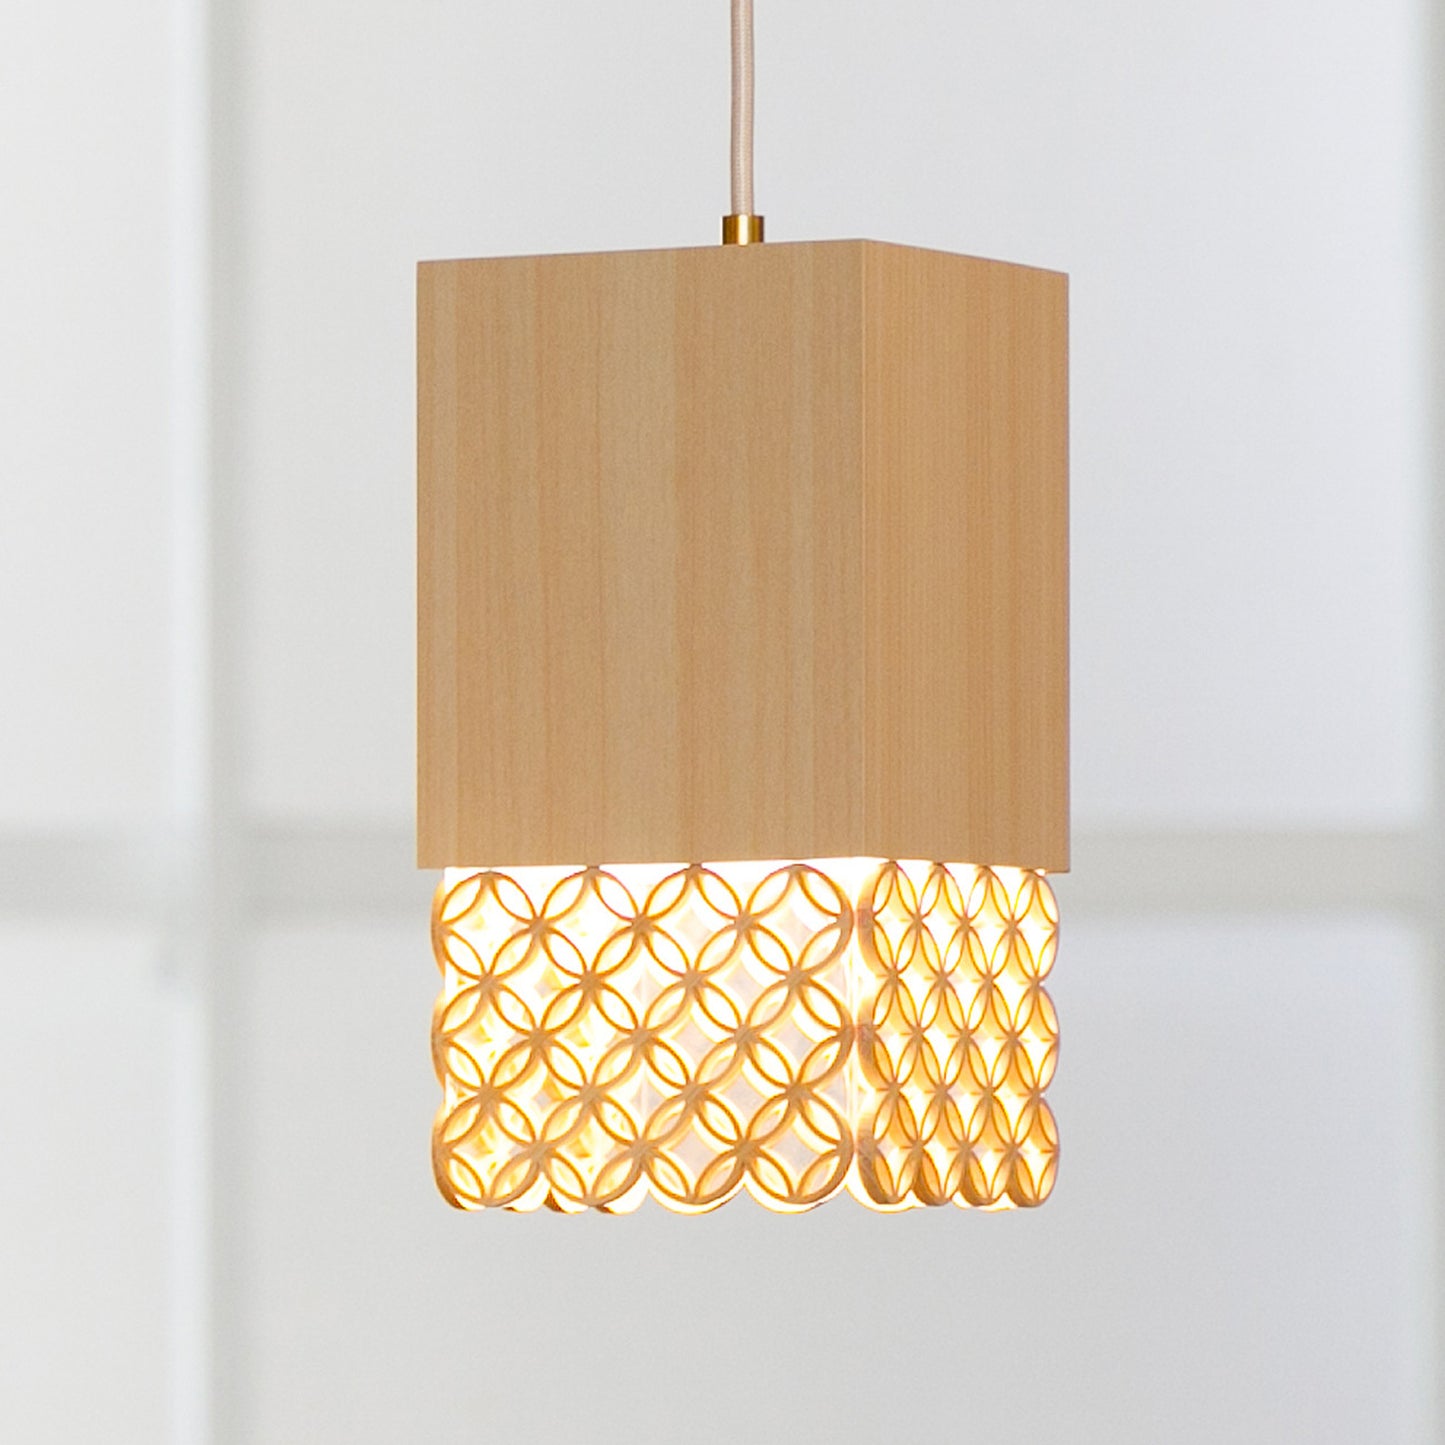 Hanakumiko pendant light lampshade (3 rows)